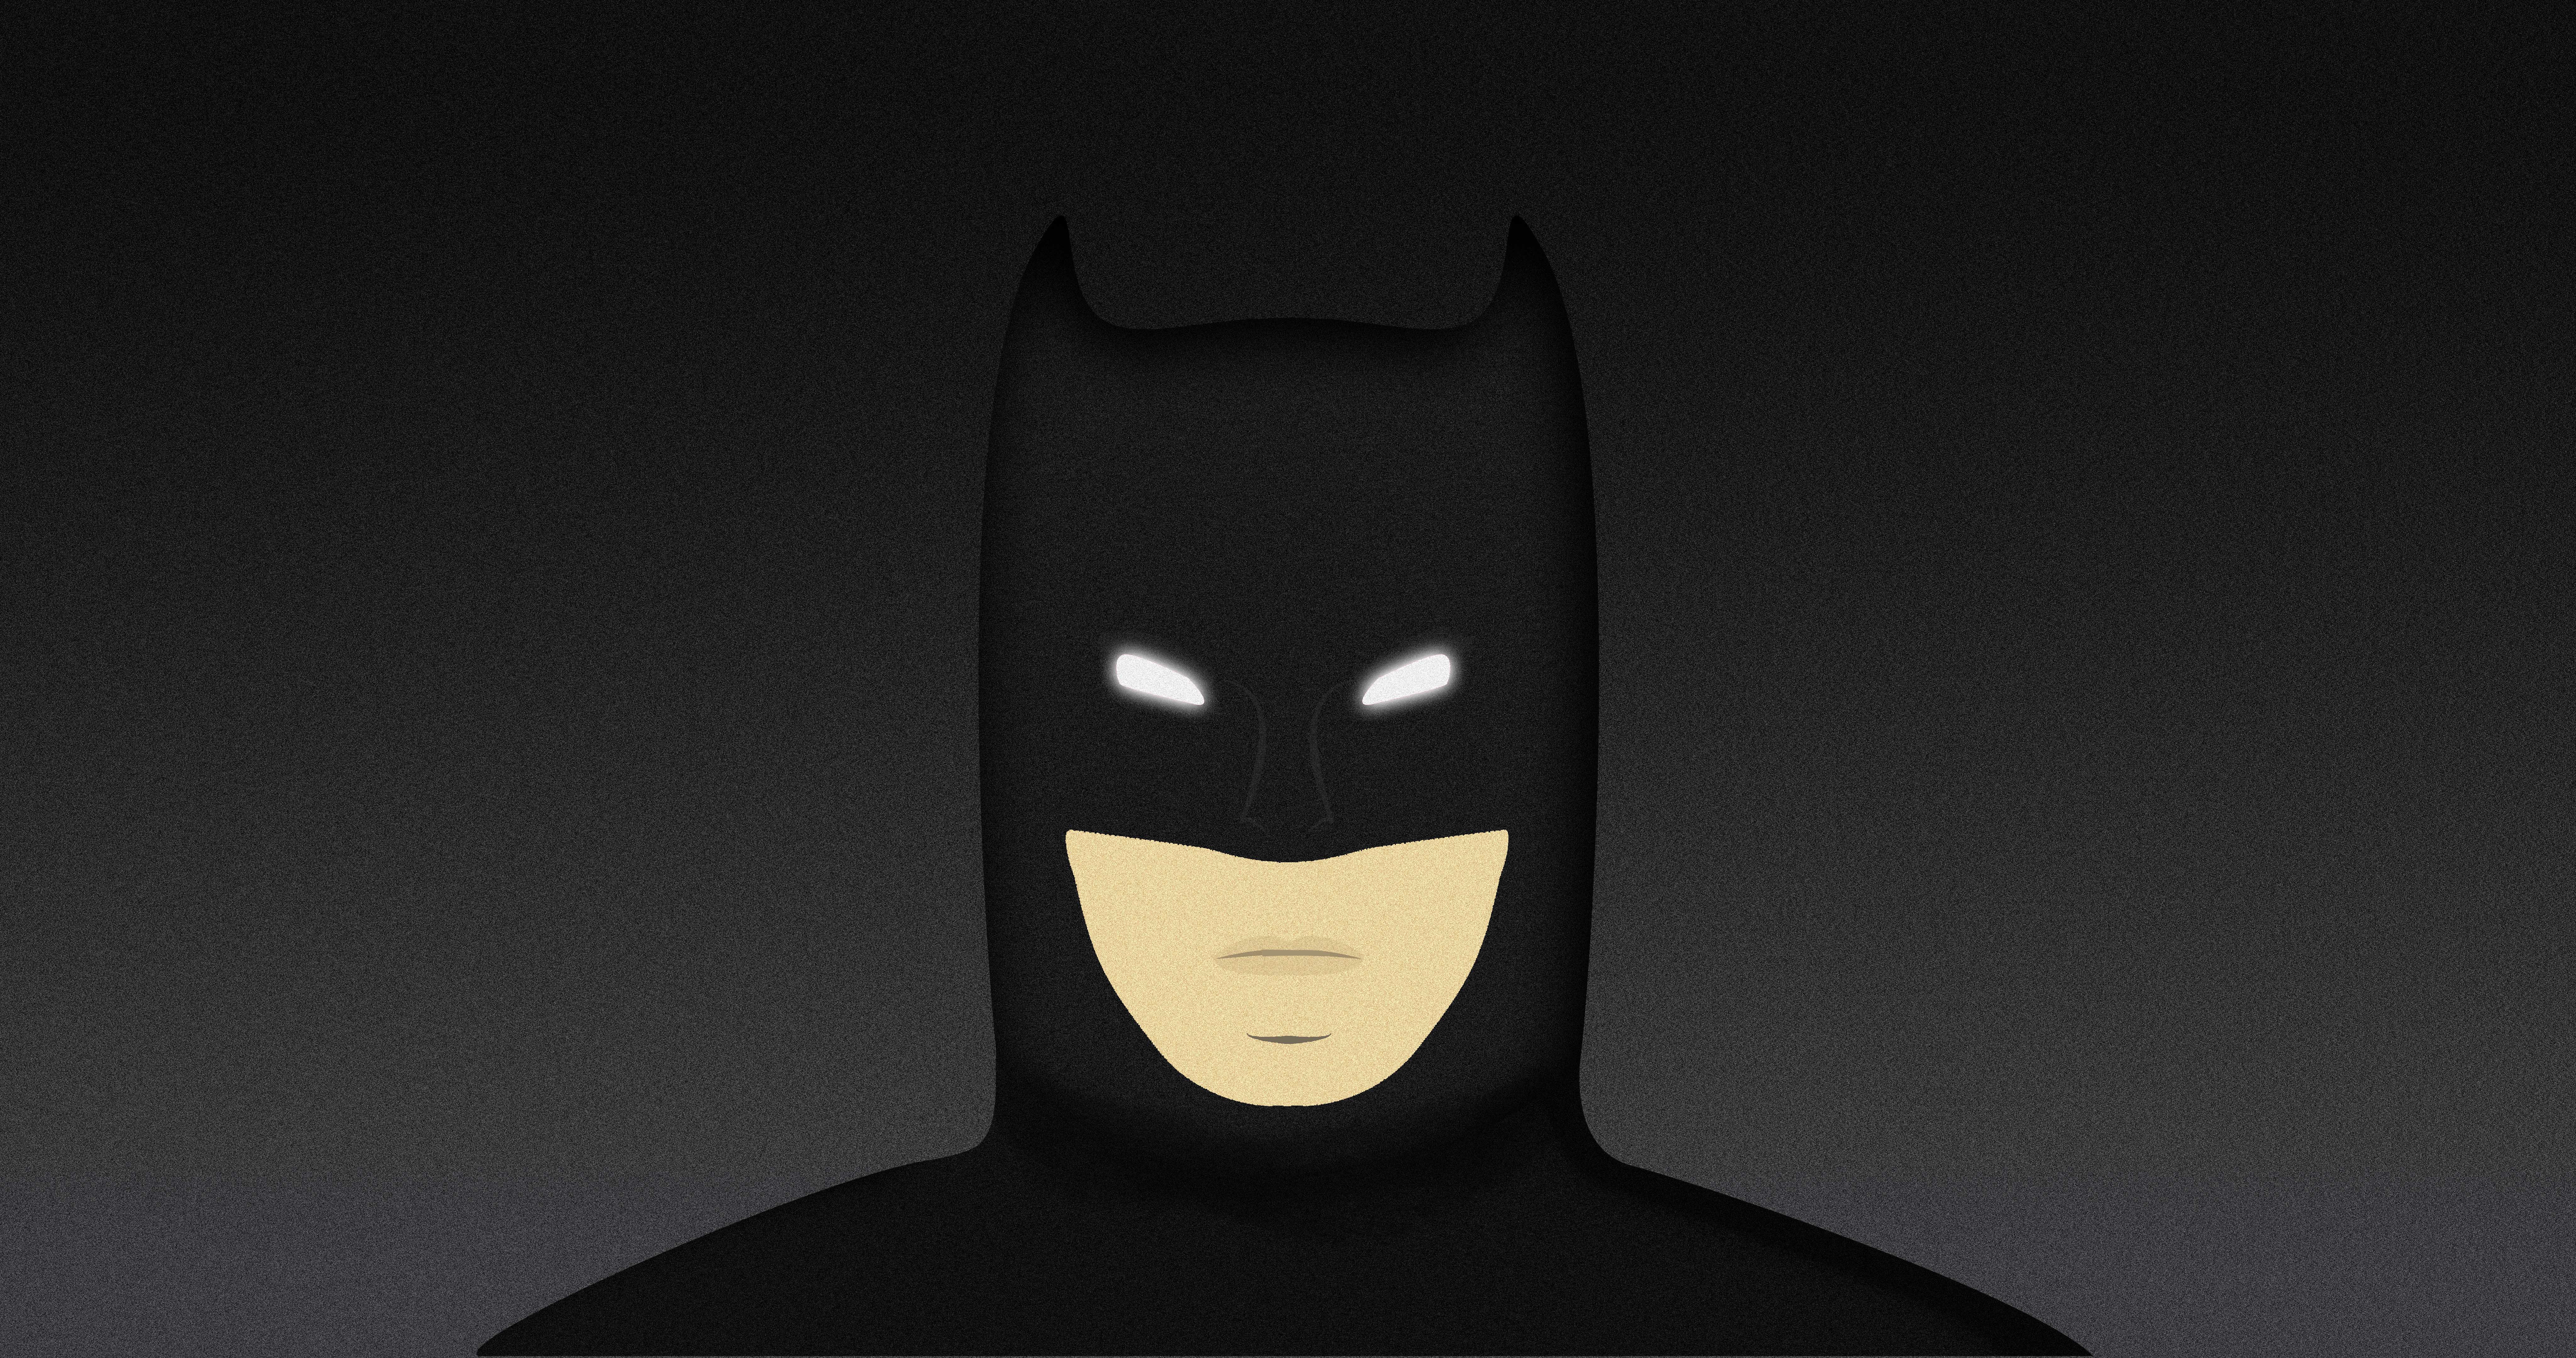 Batman Black Minimalism Gradient Simple Background Head Cape Mask DC Comics Superhero Comic Art Comi 8192x4320